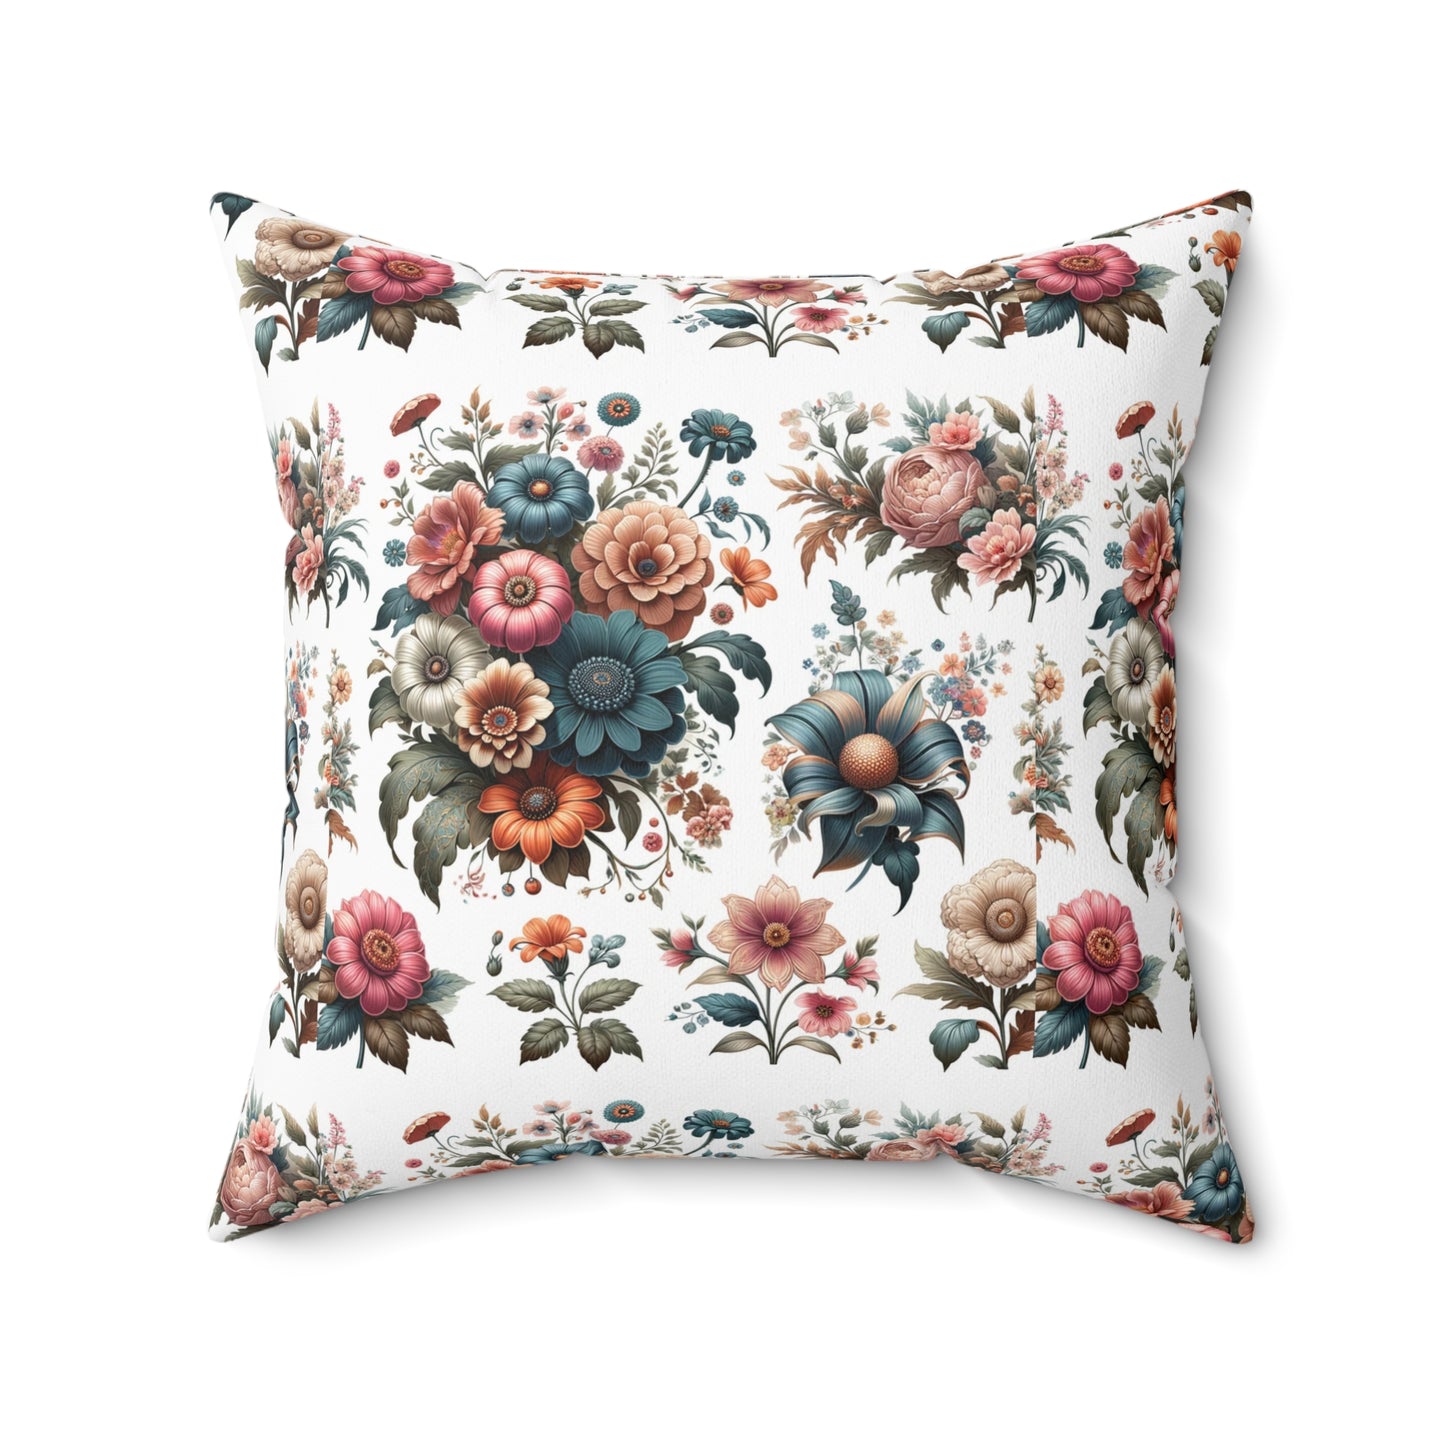 Blossoming Elegance: Exquisite Floral Symphony Pillow Design